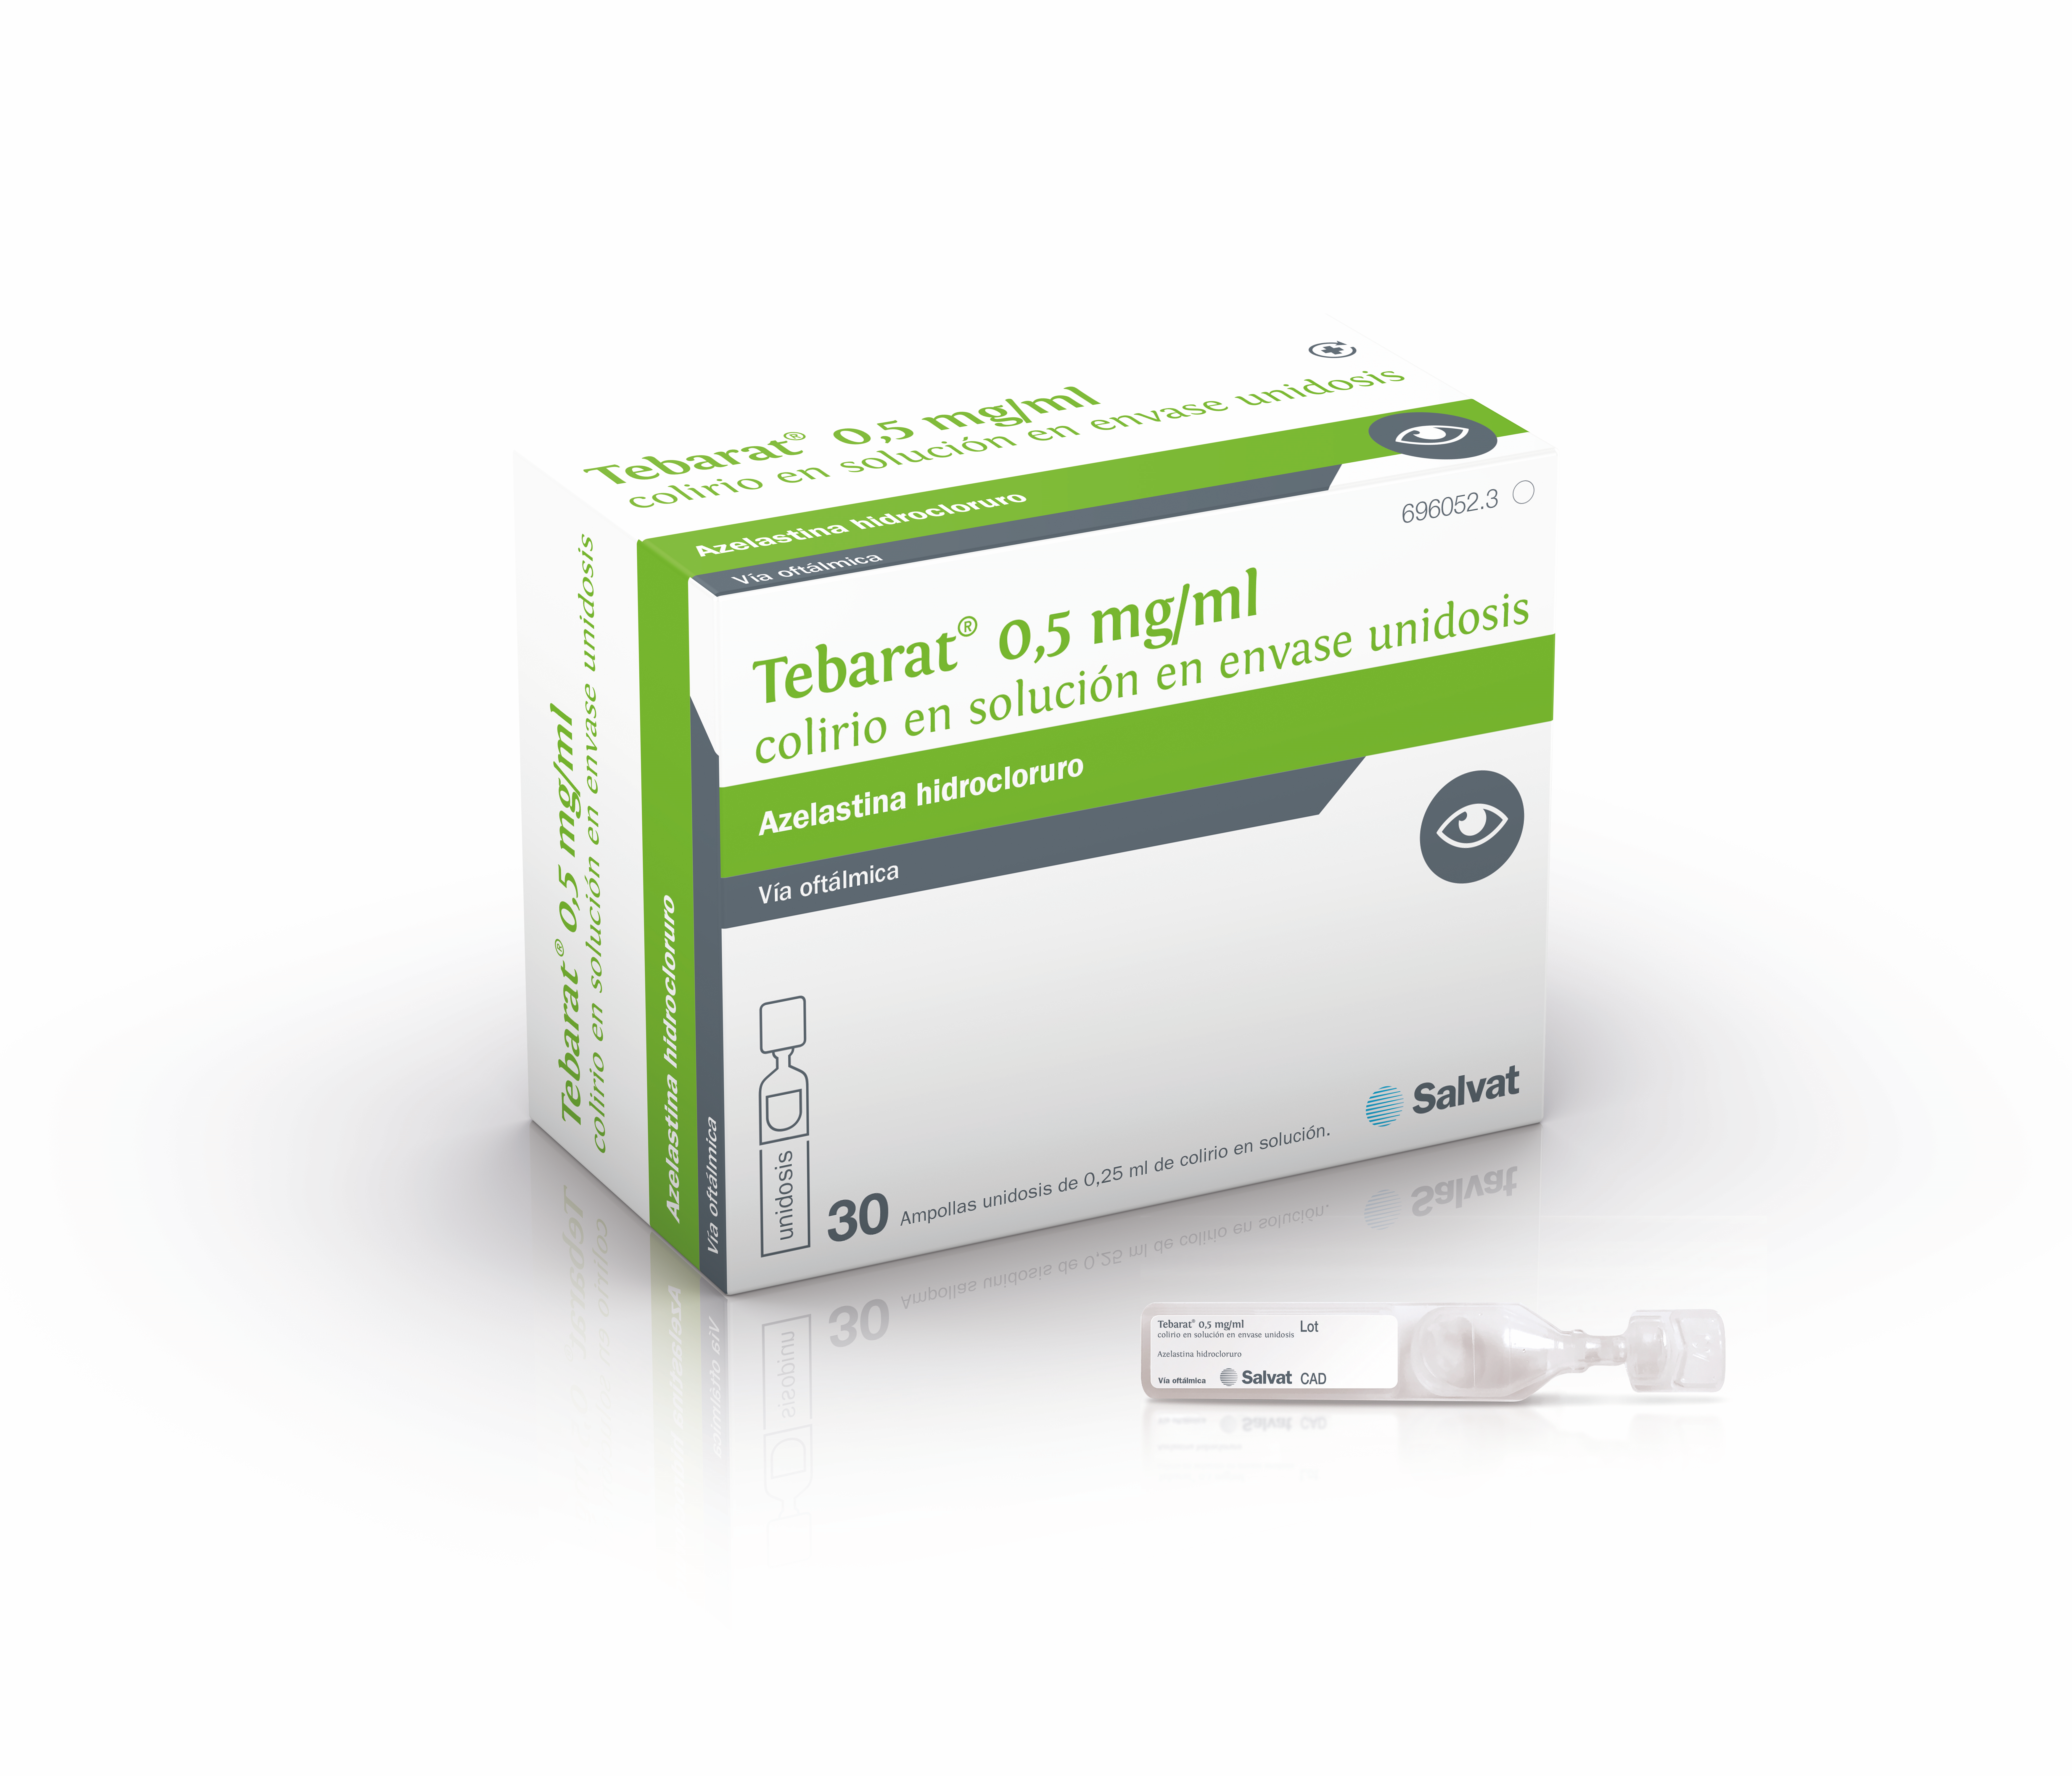 Tebarat 0.5 mg/ml - Allergic conjunctivitis - single-dose vials eye drops - Rx